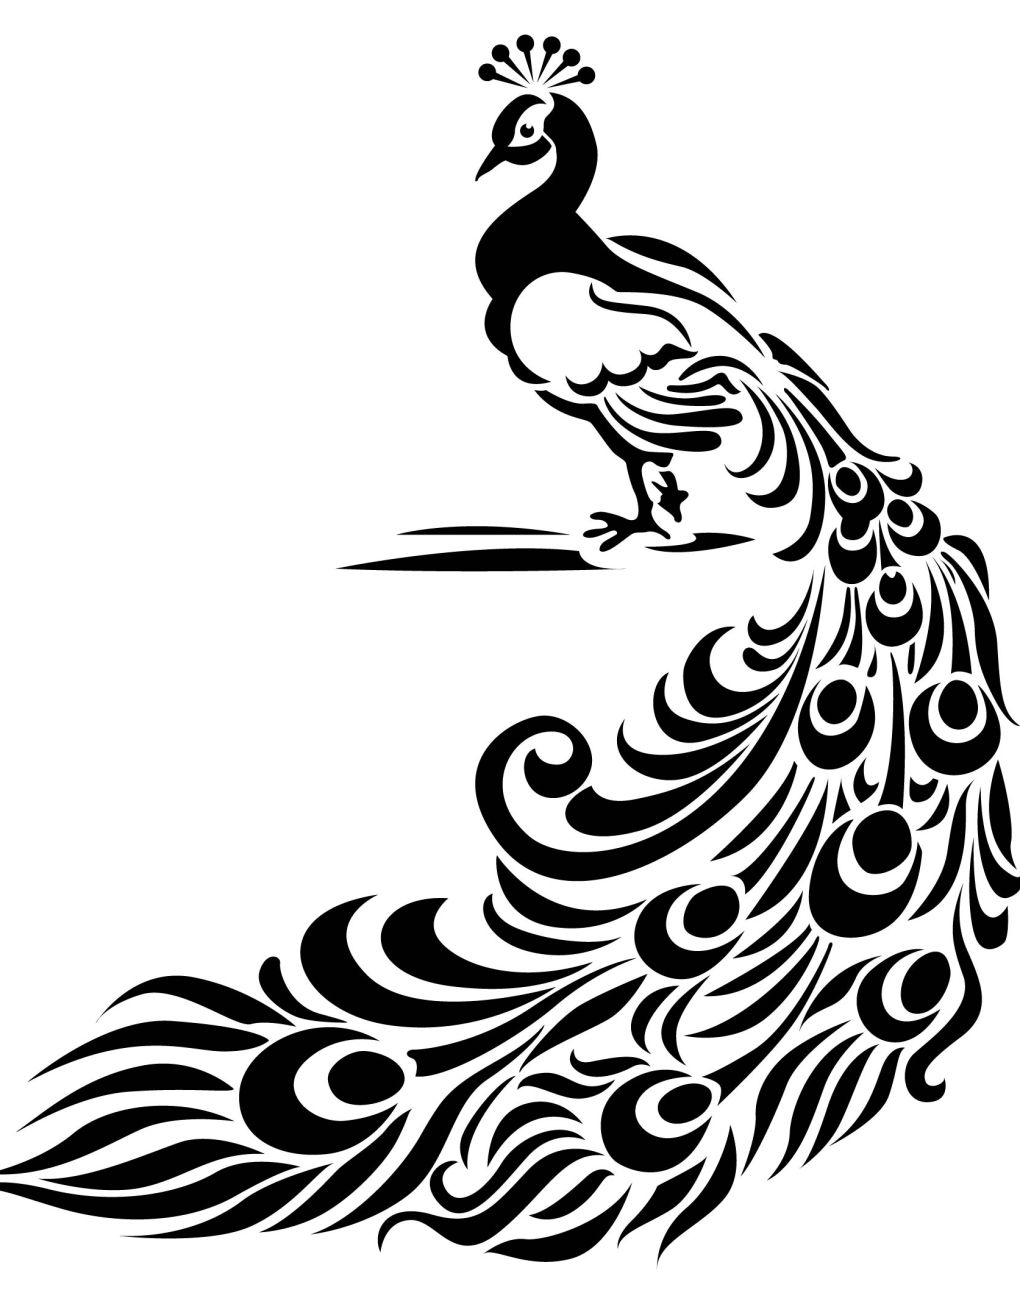 Cool tribal peacock tattoo design